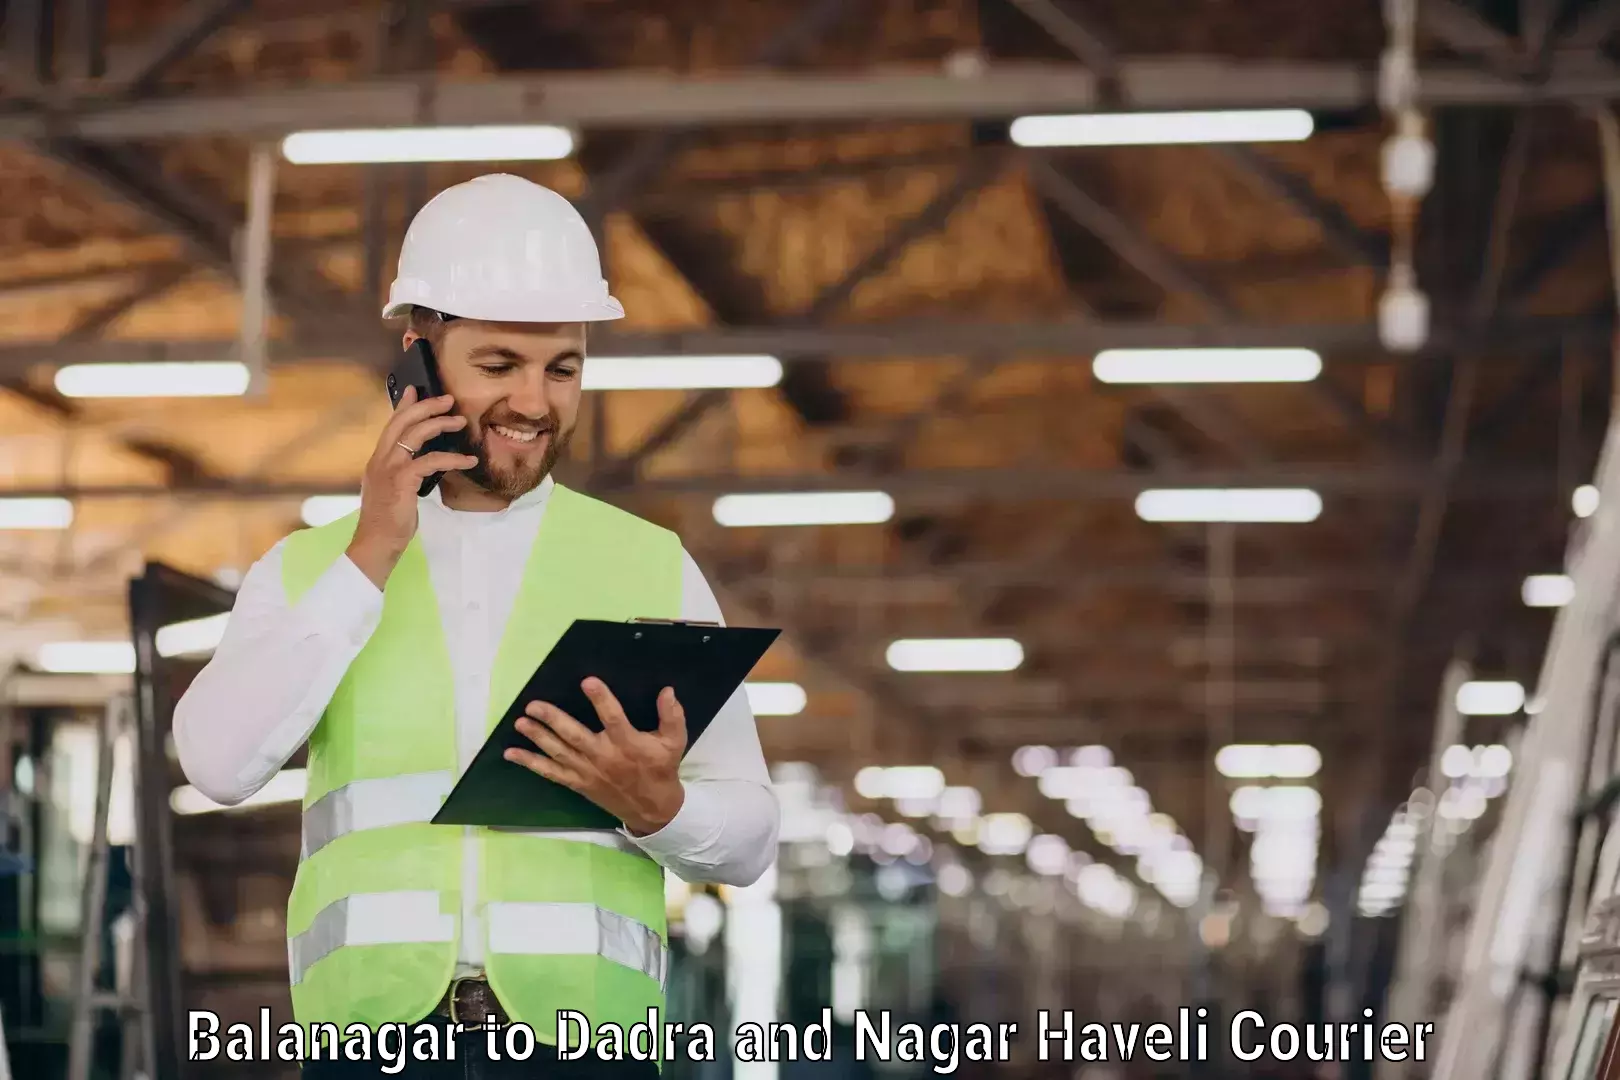 On-call courier service Balanagar to Dadra and Nagar Haveli